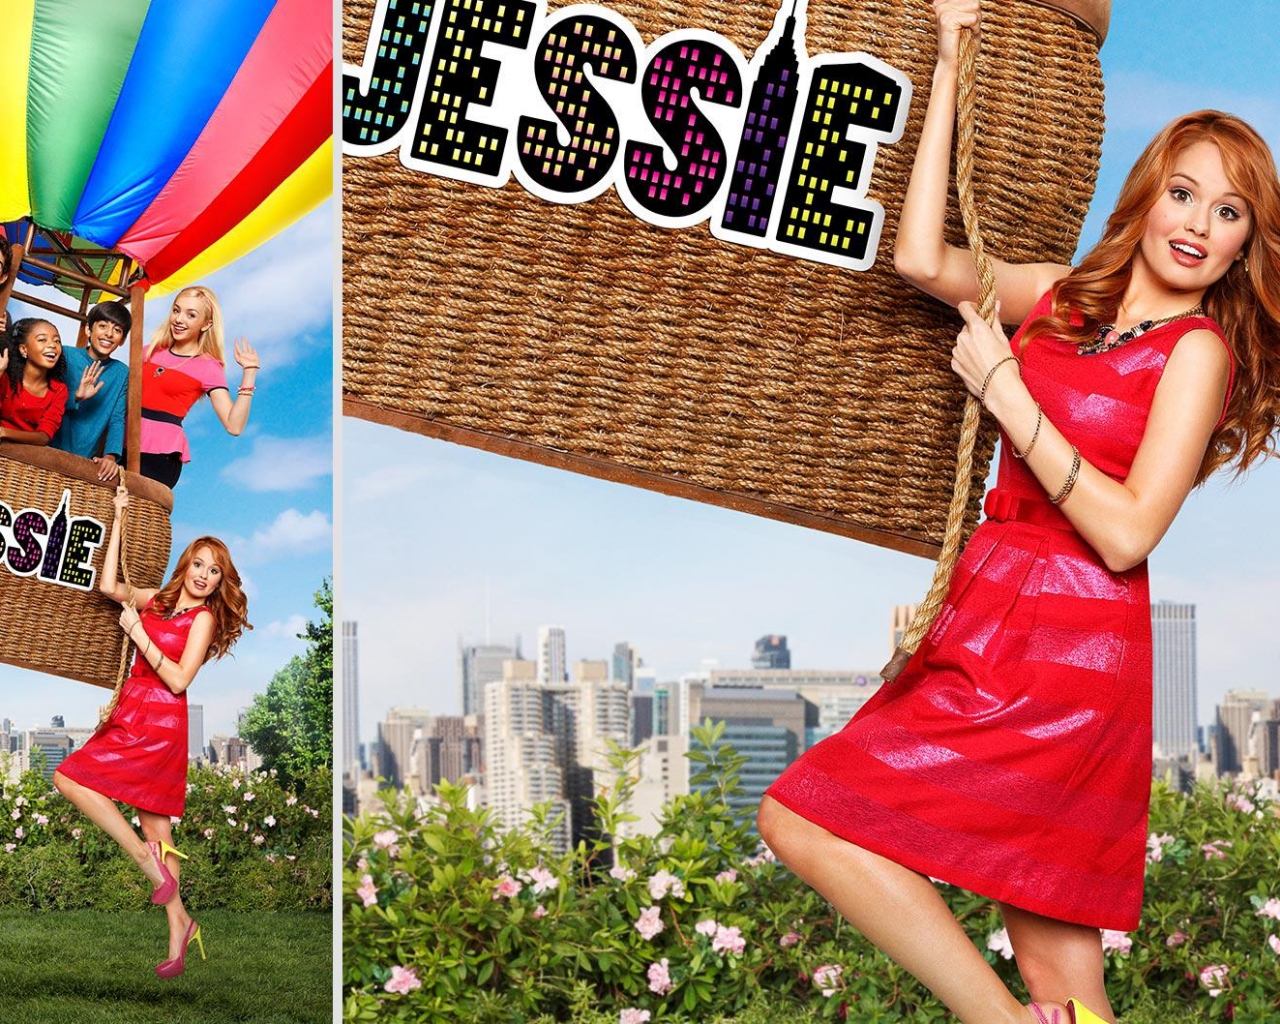 Jessie - Jessie Wallpaper (42750465) - Fanpop